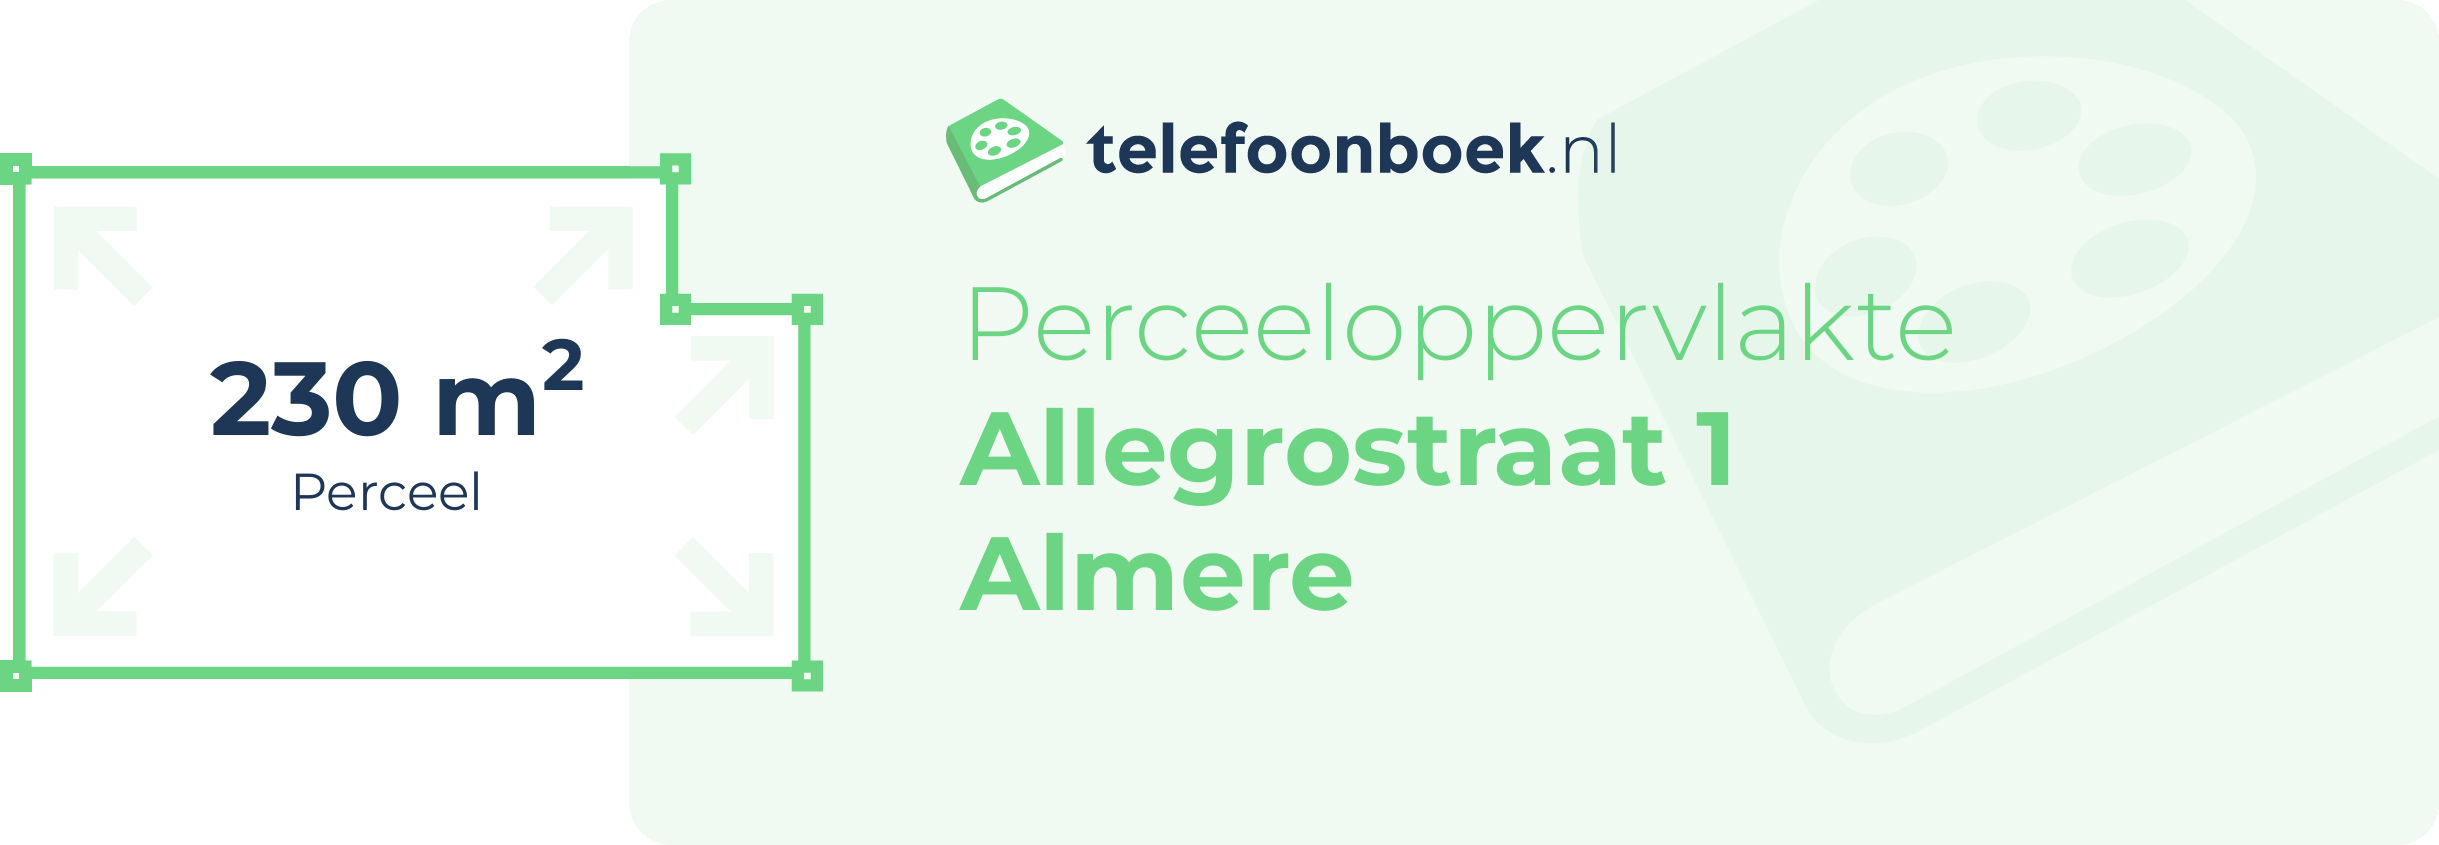 Perceeloppervlakte Allegrostraat 1 Almere